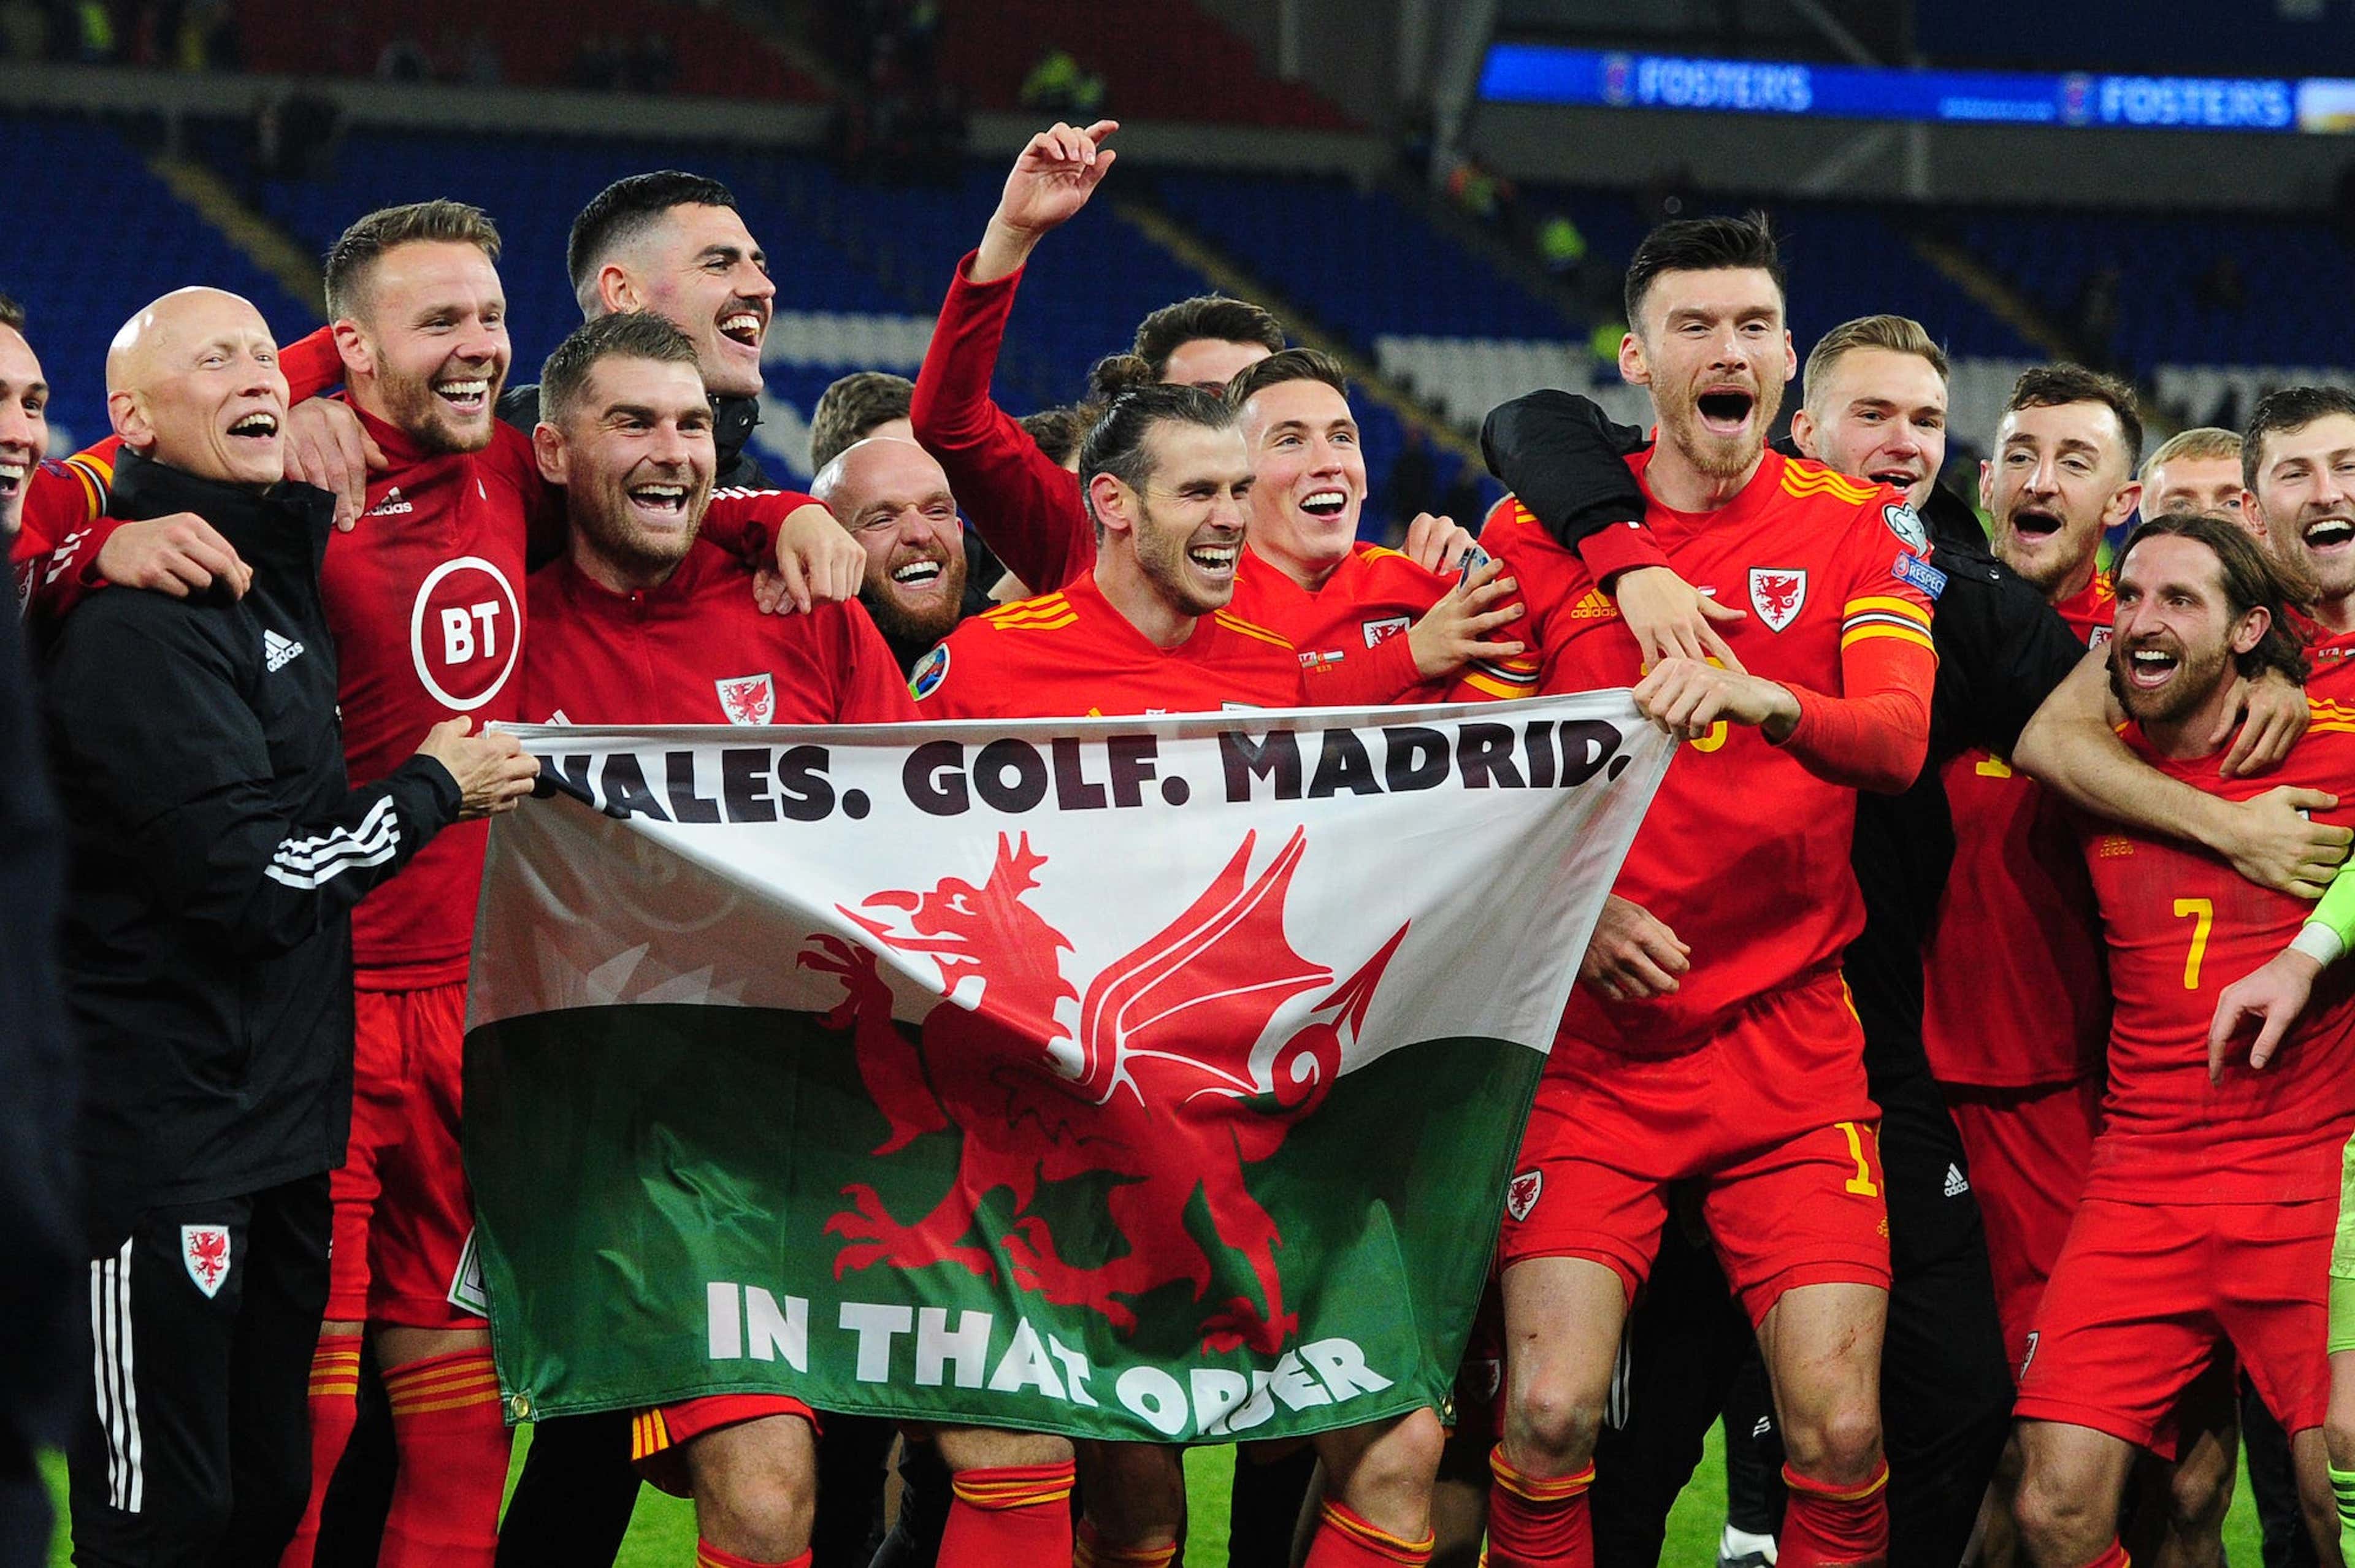 Gareth Bale Wales flag - Wales Golf Madrid in that order